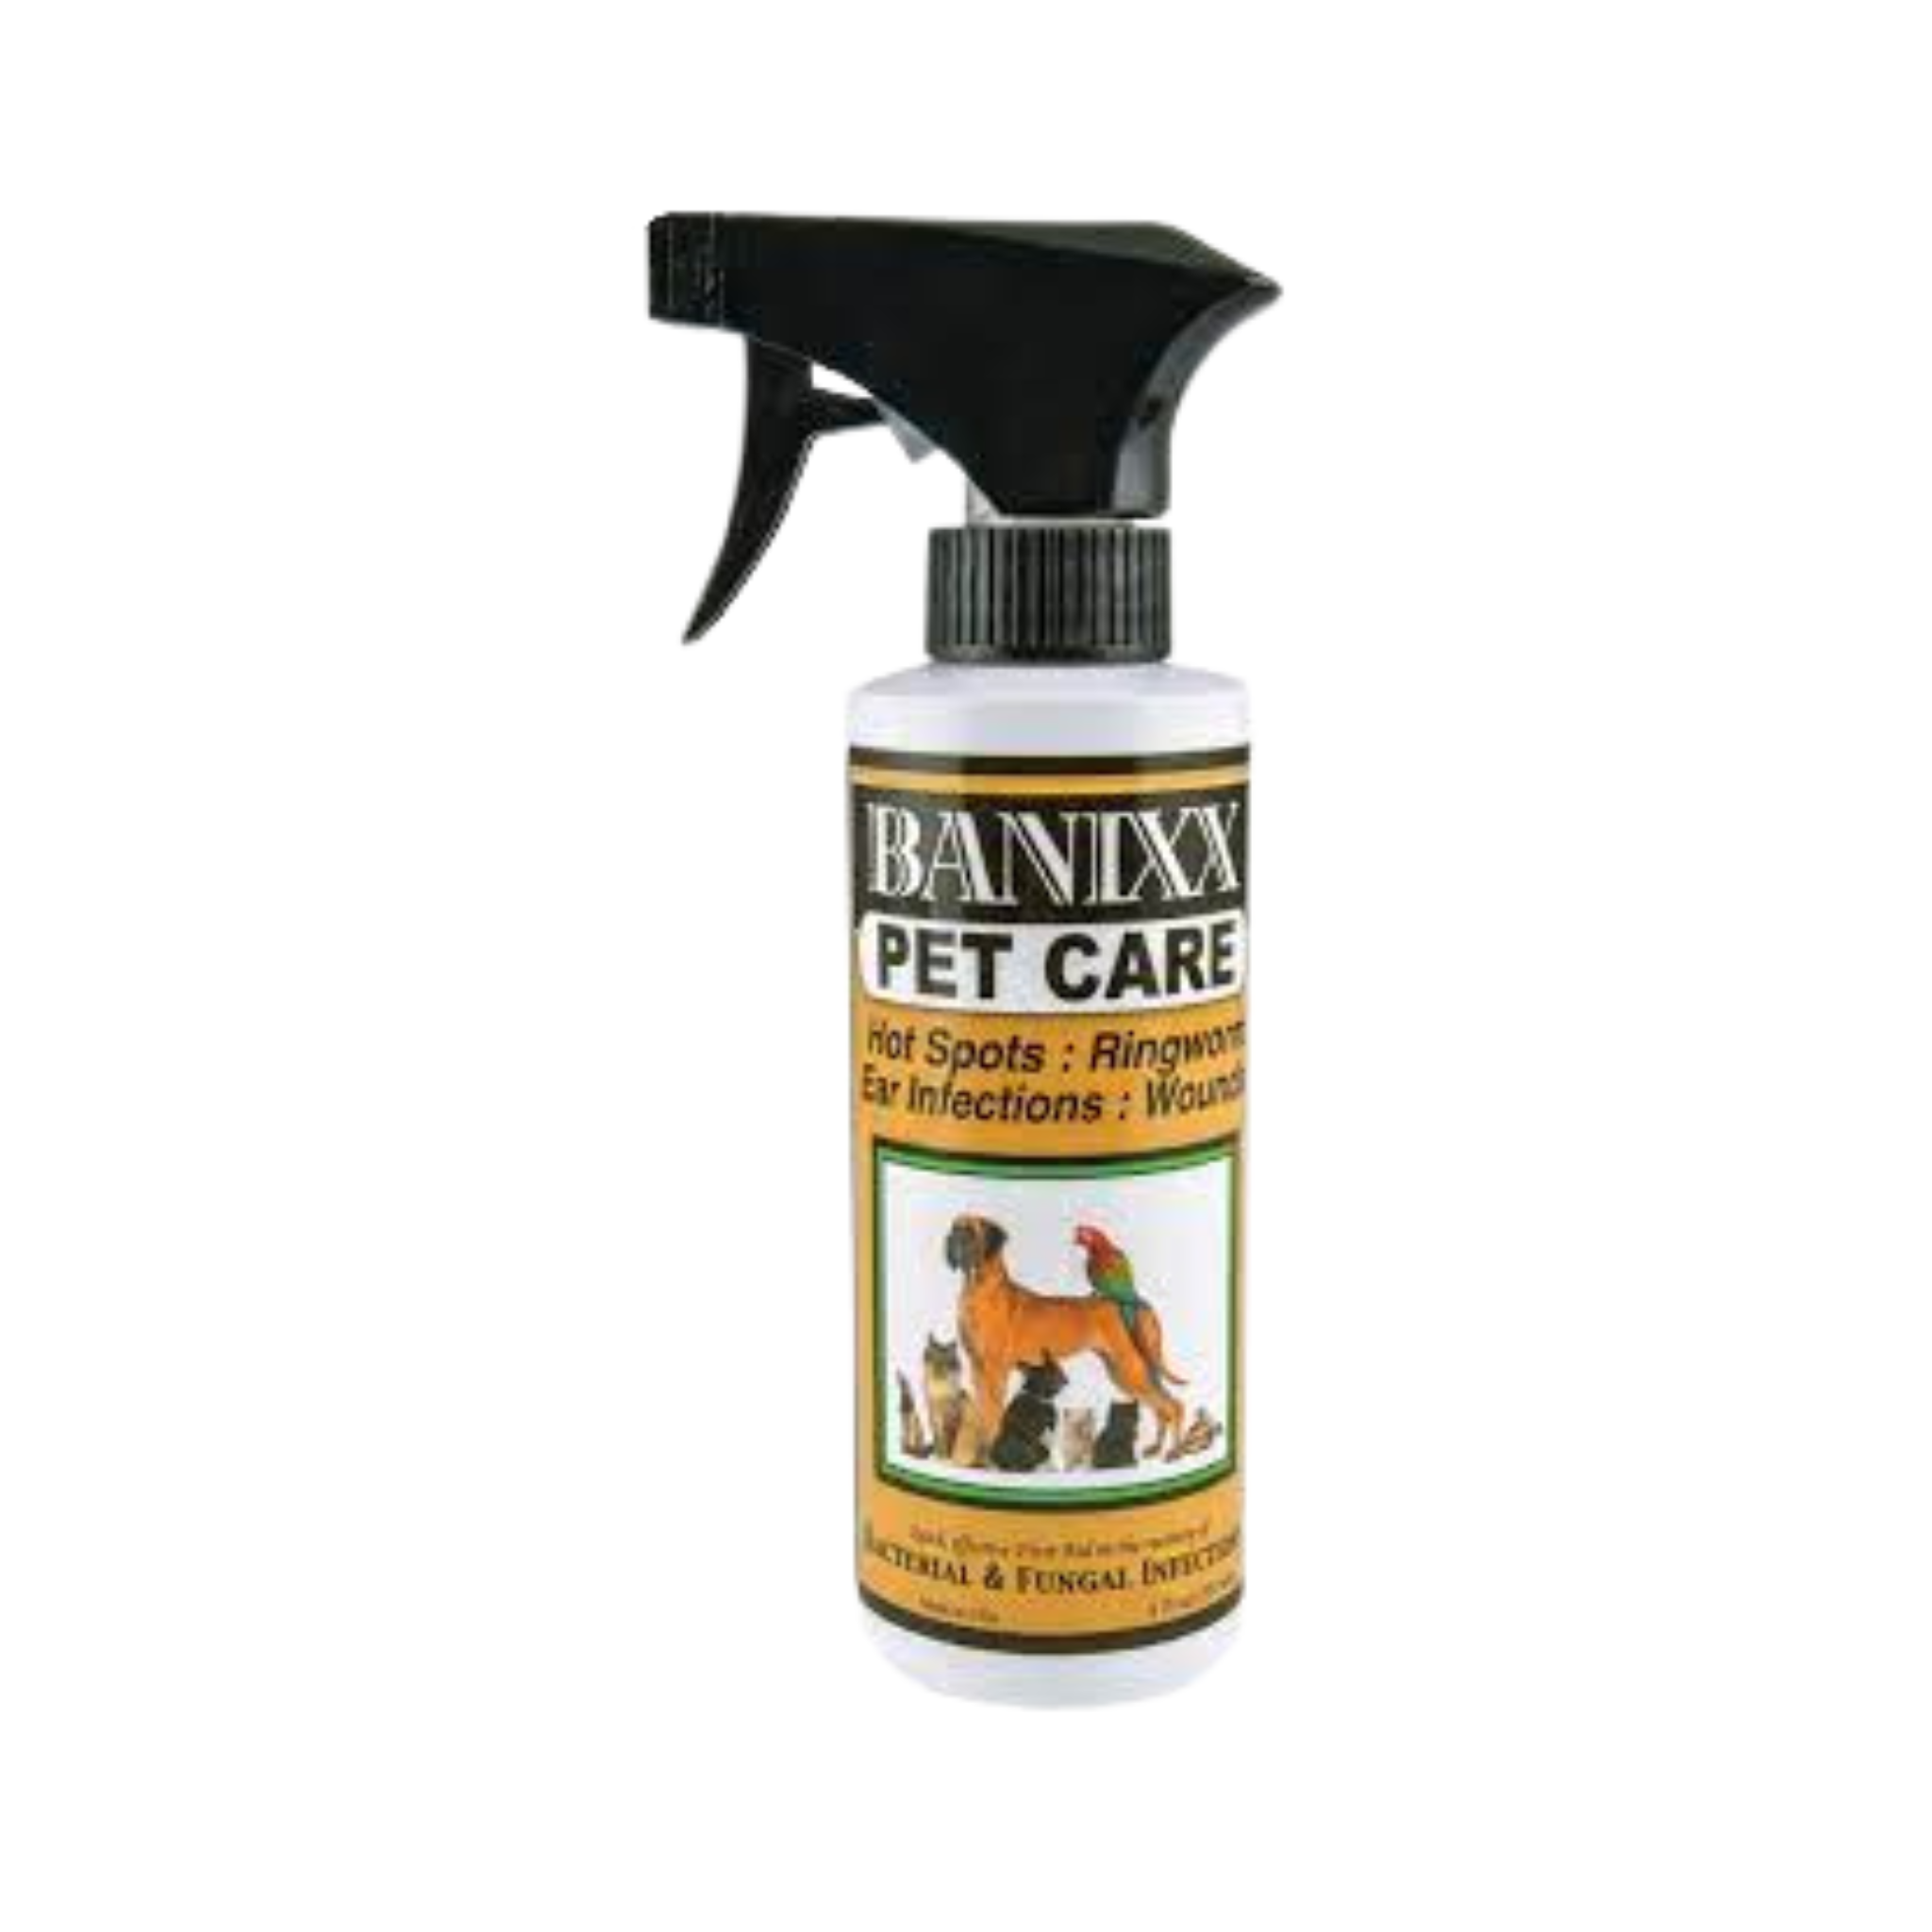 Banixx Pet Care Spray